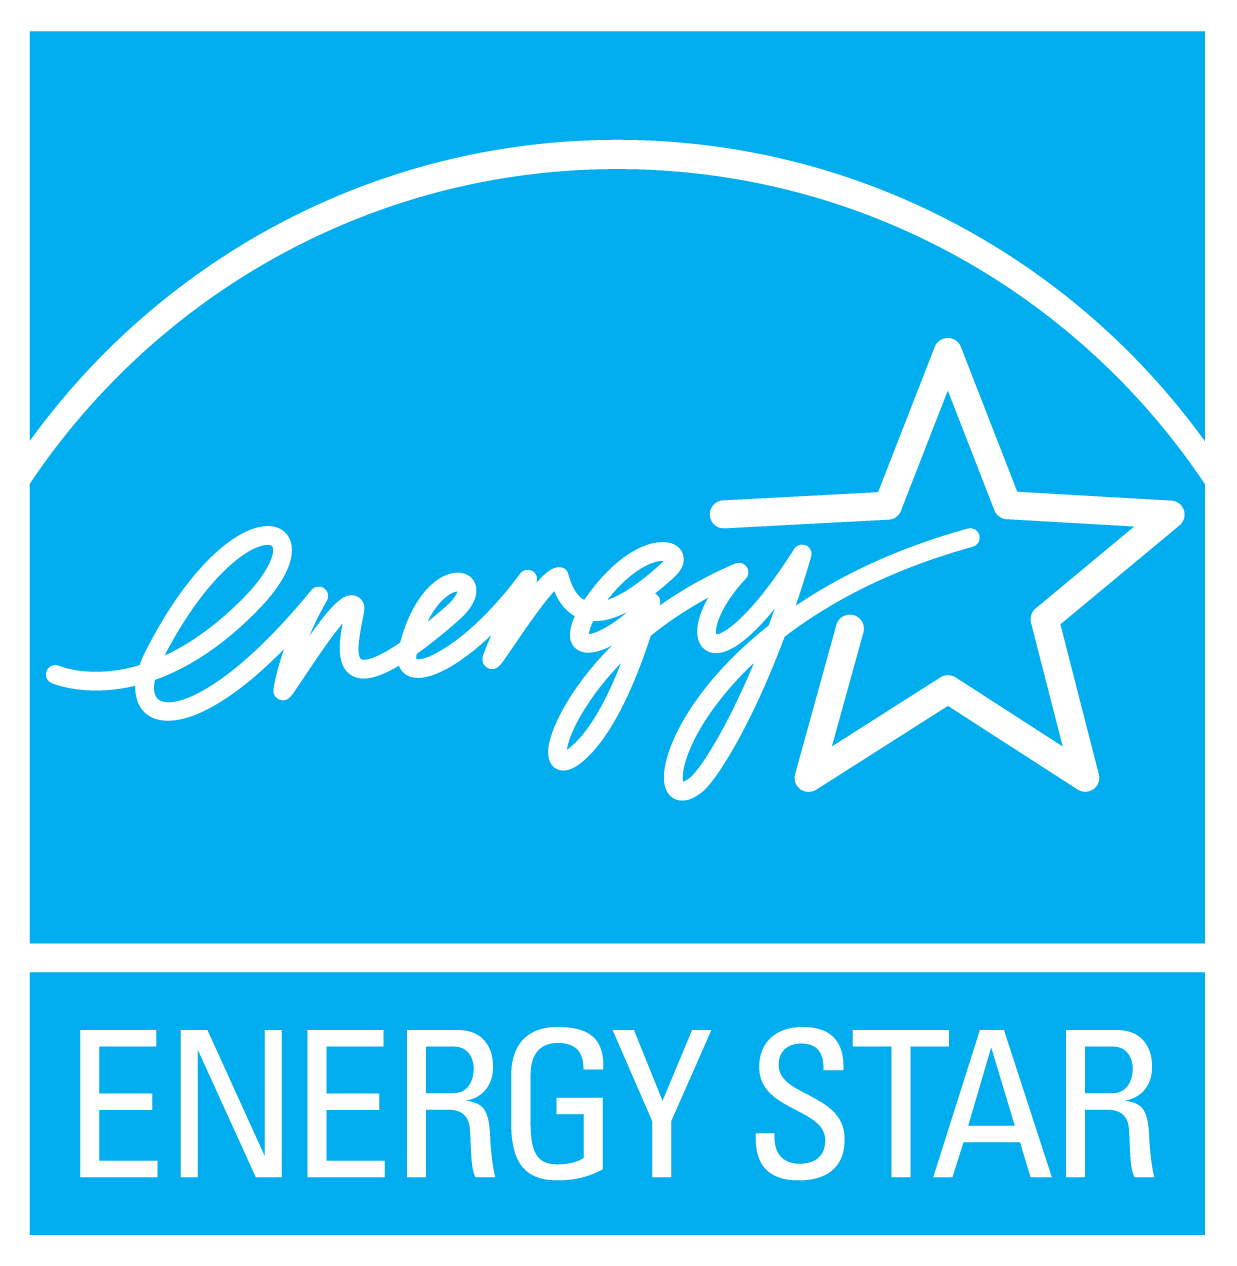 https://www.umweltbundesamt.de/sites/default/files/medien/530/bilder/energy-star_logo_b600_uba-web.jpg